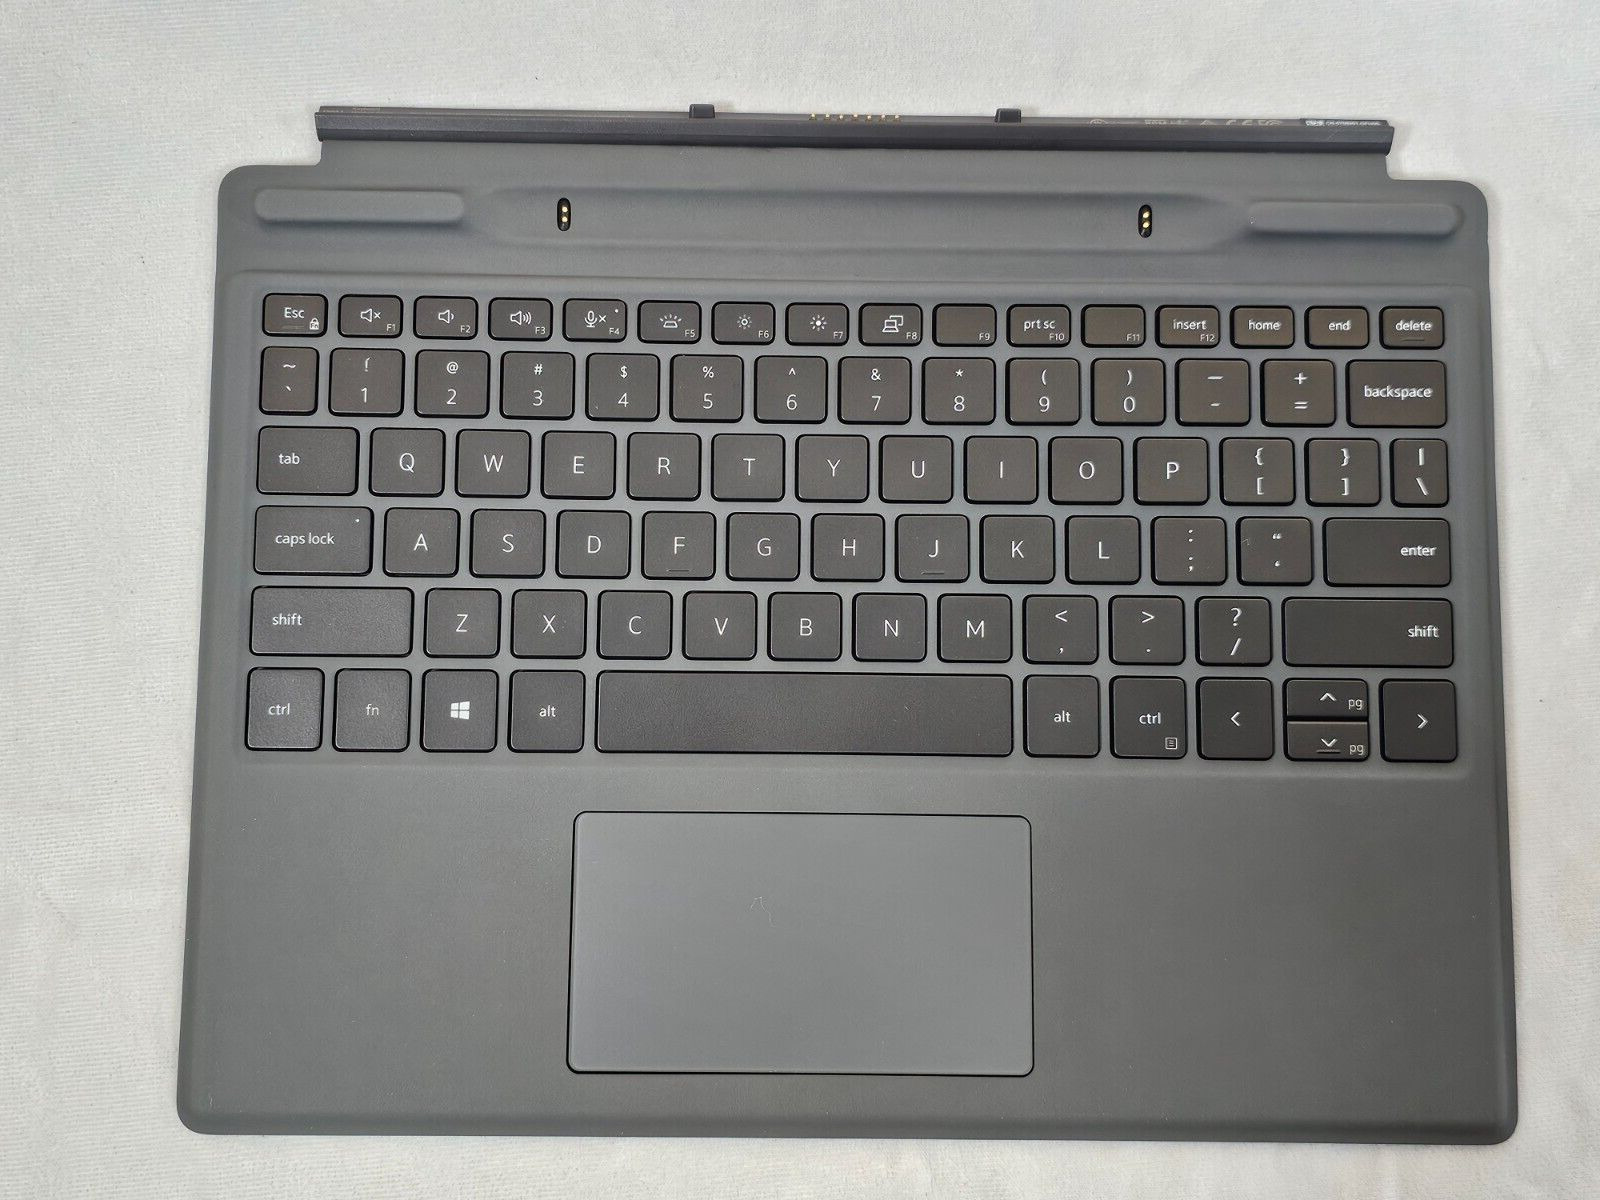 Detachable Travel Keyboard for Dell 7320 7310 Keypad Backlight Bluetooth Travel